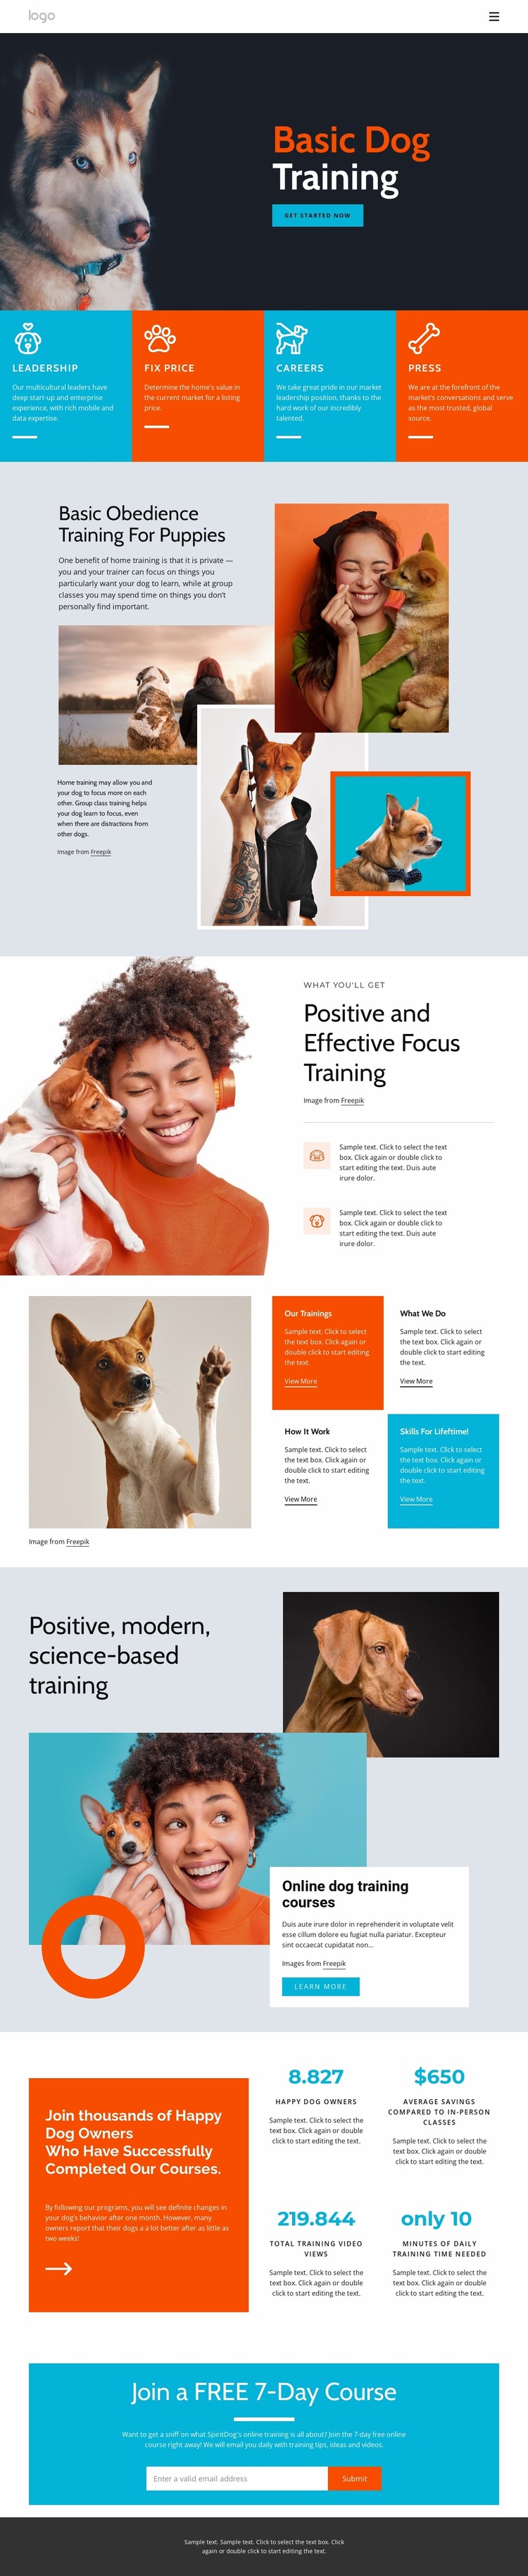 Dog training courses Website Design